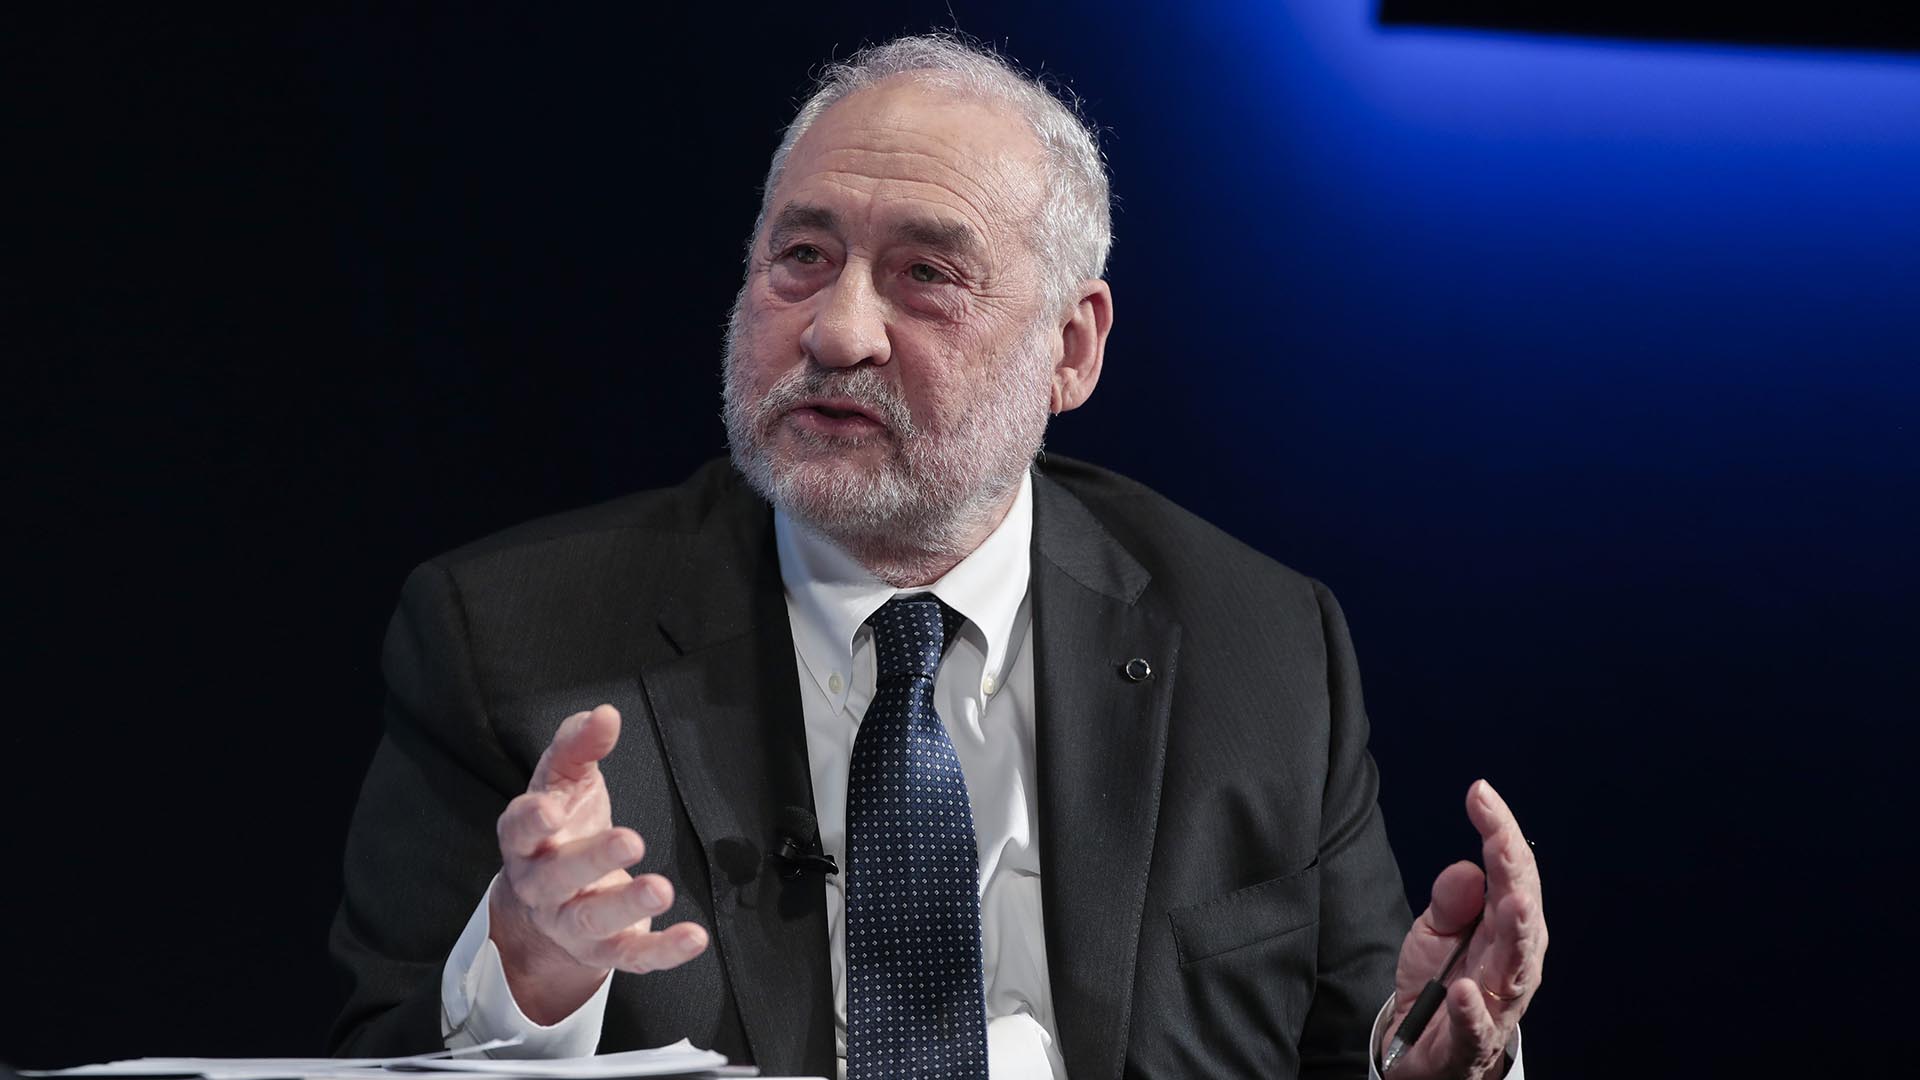 Joseph Stiglitz, economics professor at Columbia University, gestures as he speaks during a panel session on day three of the World Economic Forum (WEF) in Davos, Switzerland.